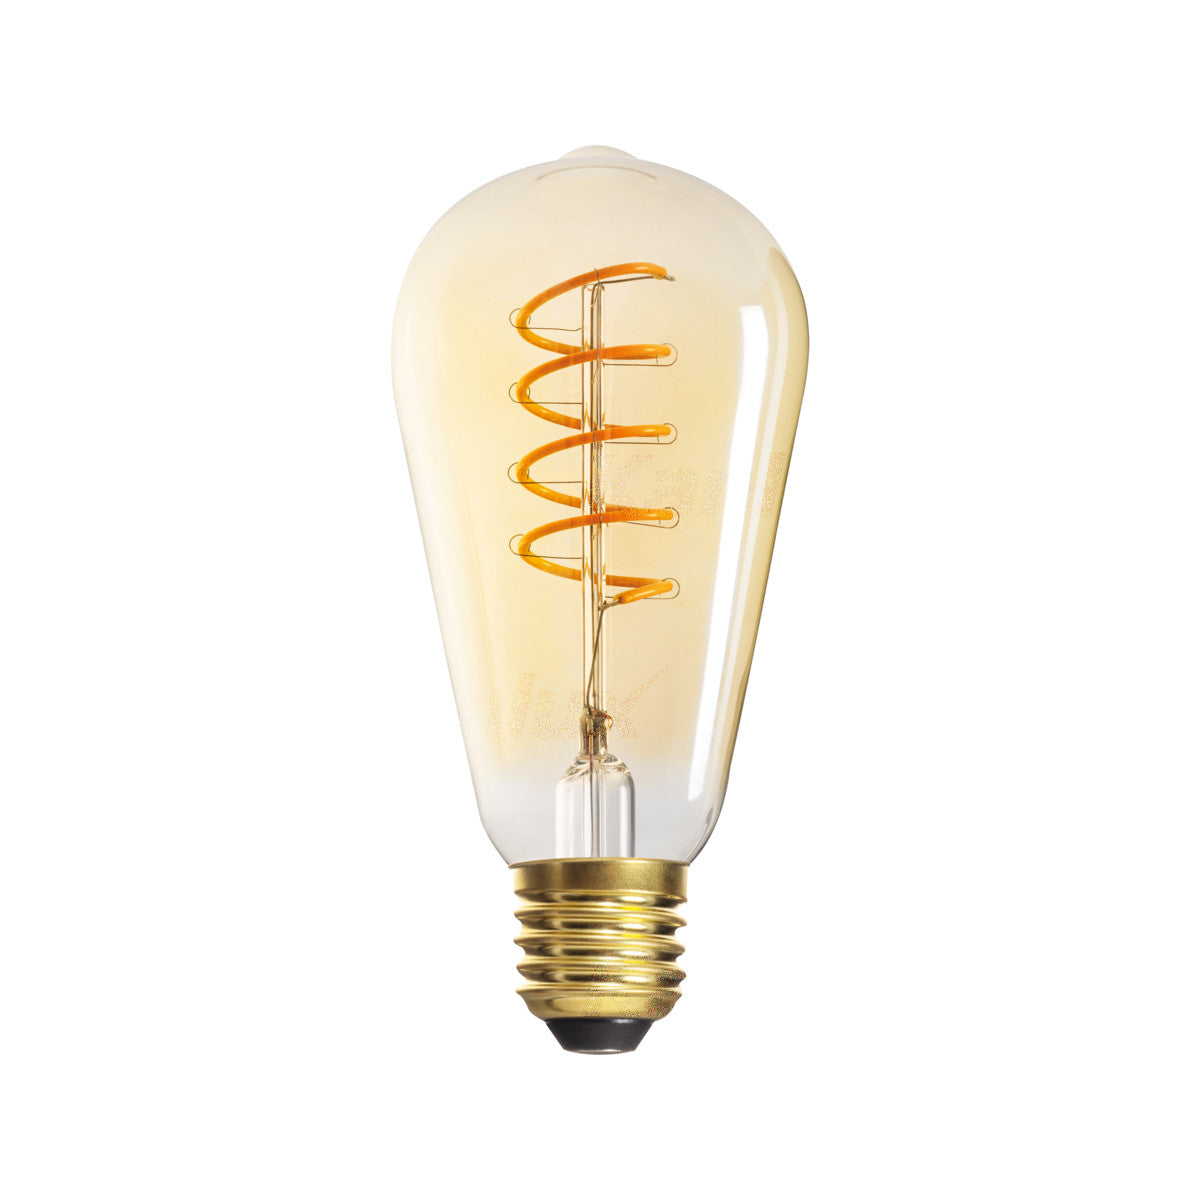 Kanlux XLED ST64 4W Vintage Filament LED Edison Screw Bulb E27 Decorative Light